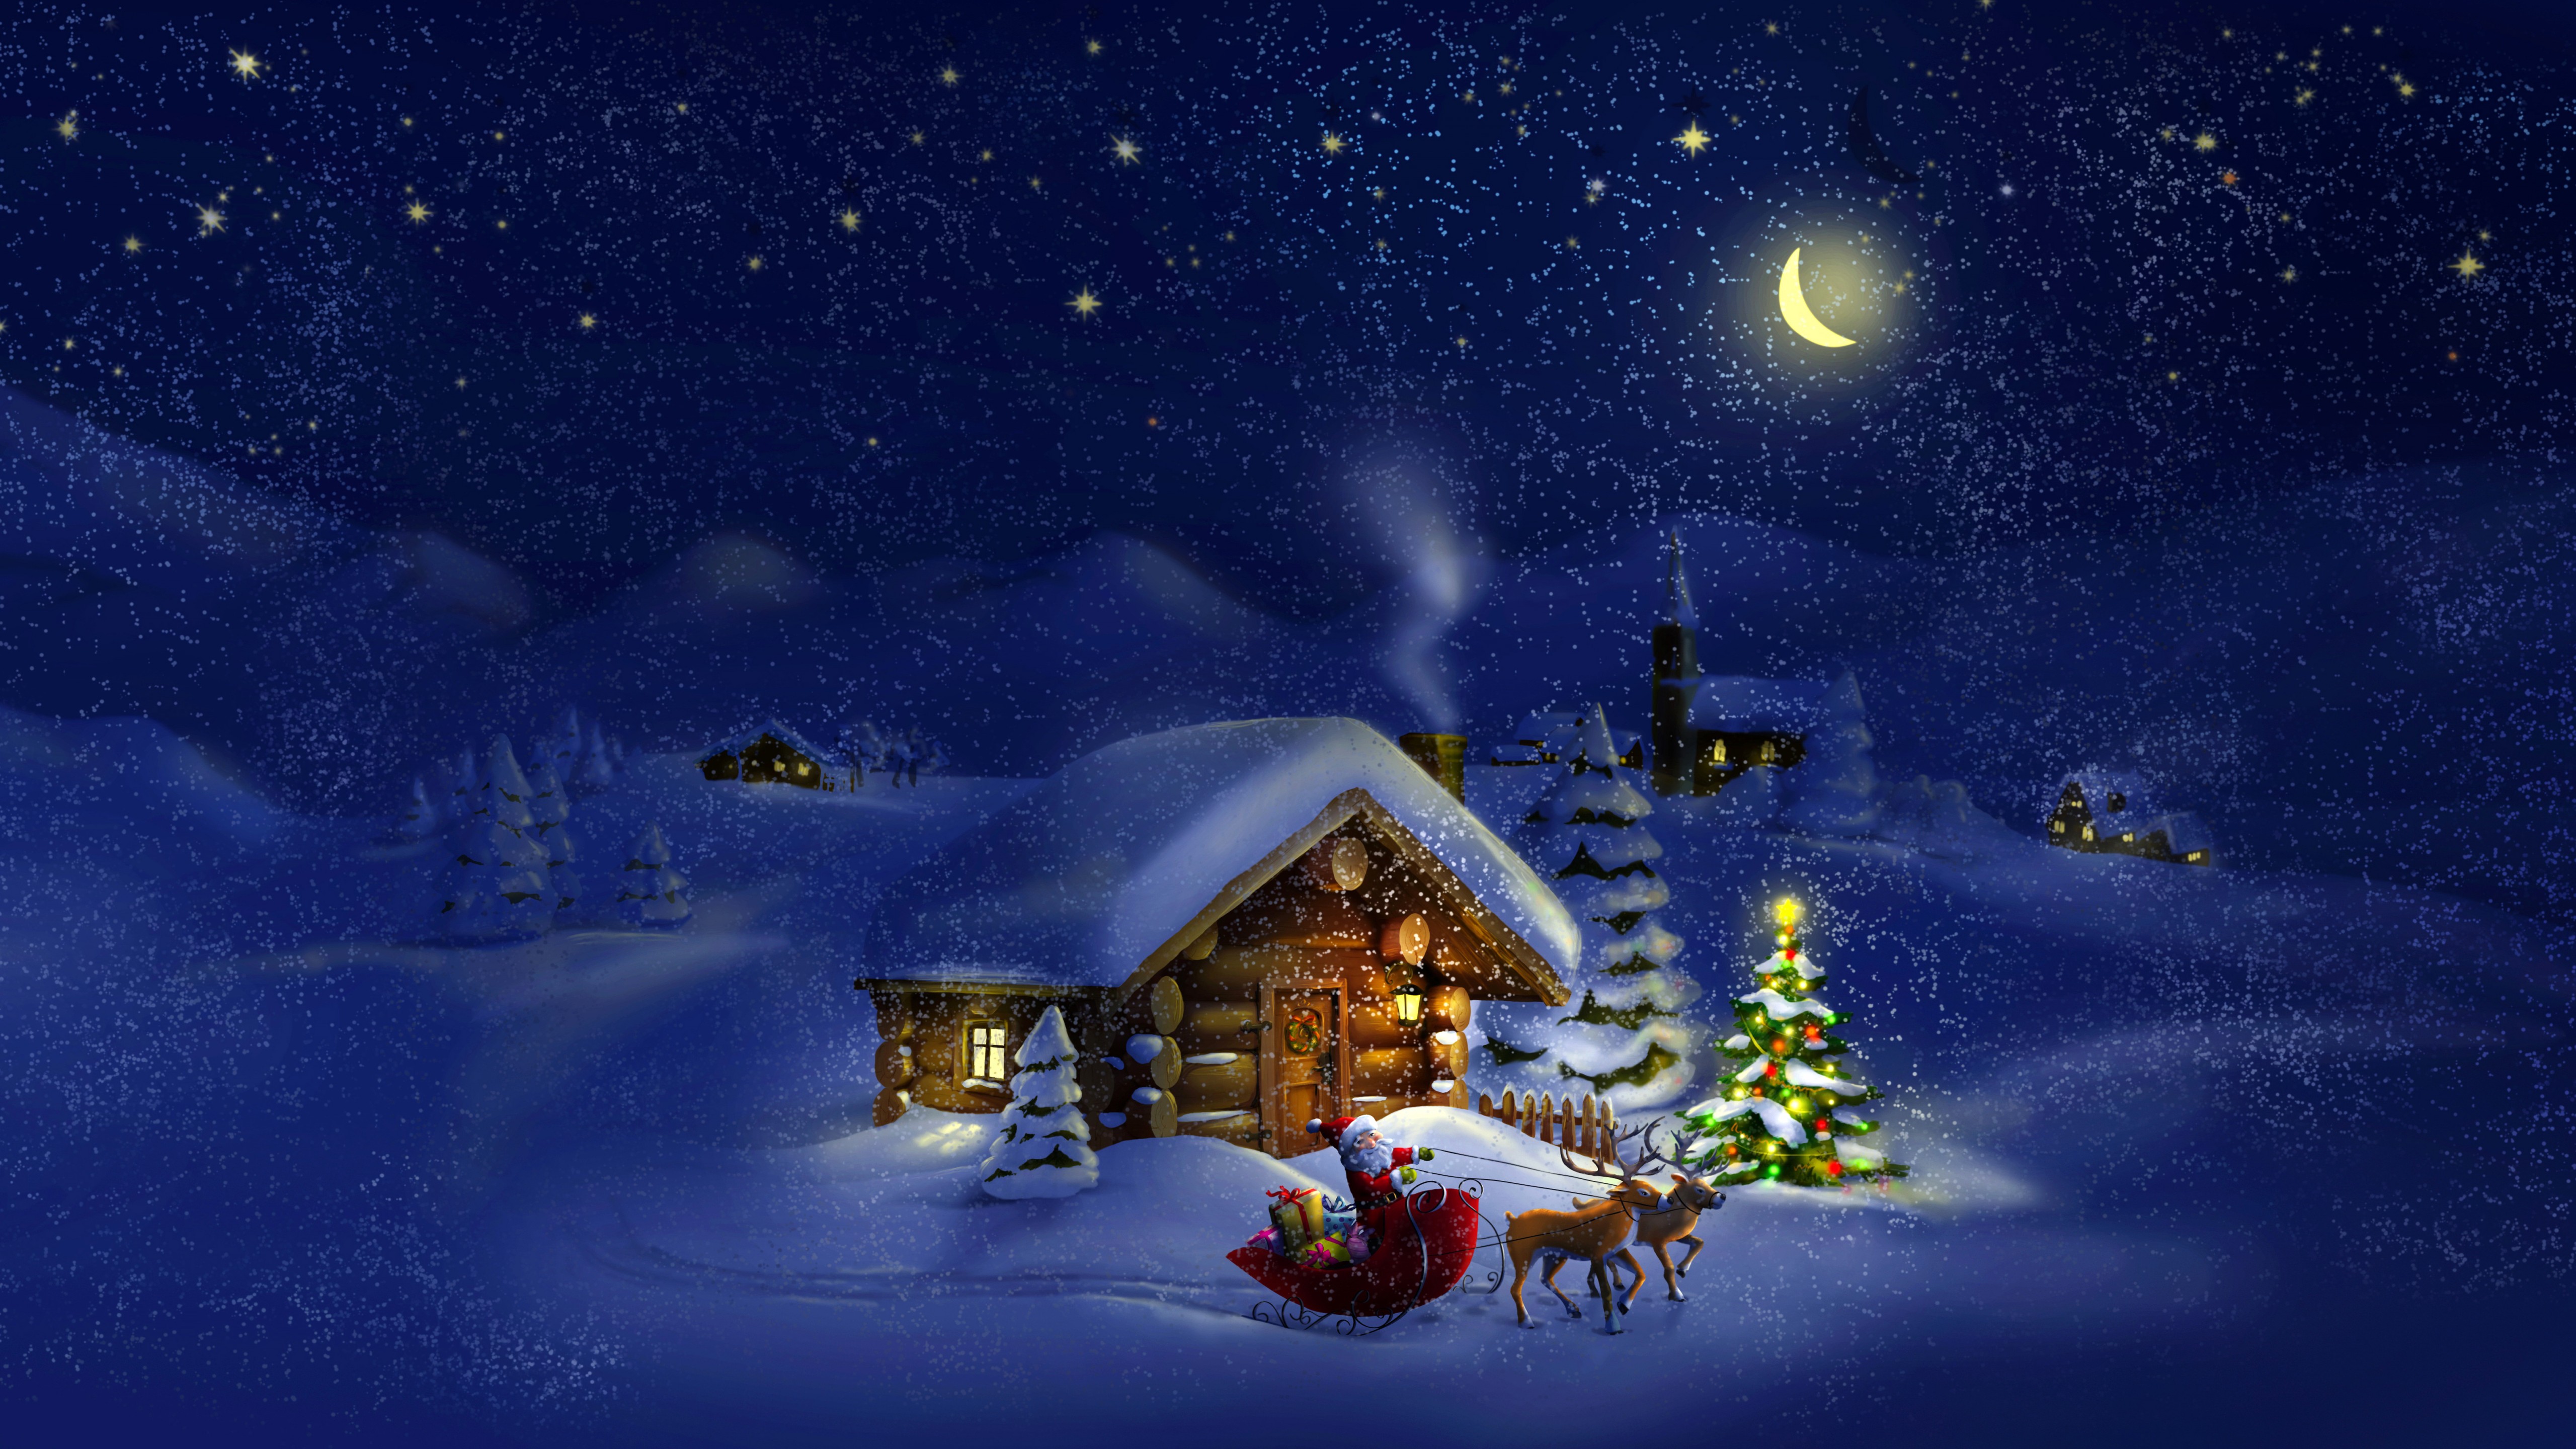 Wallpaper Christmas New Year Santa deer moon night winter